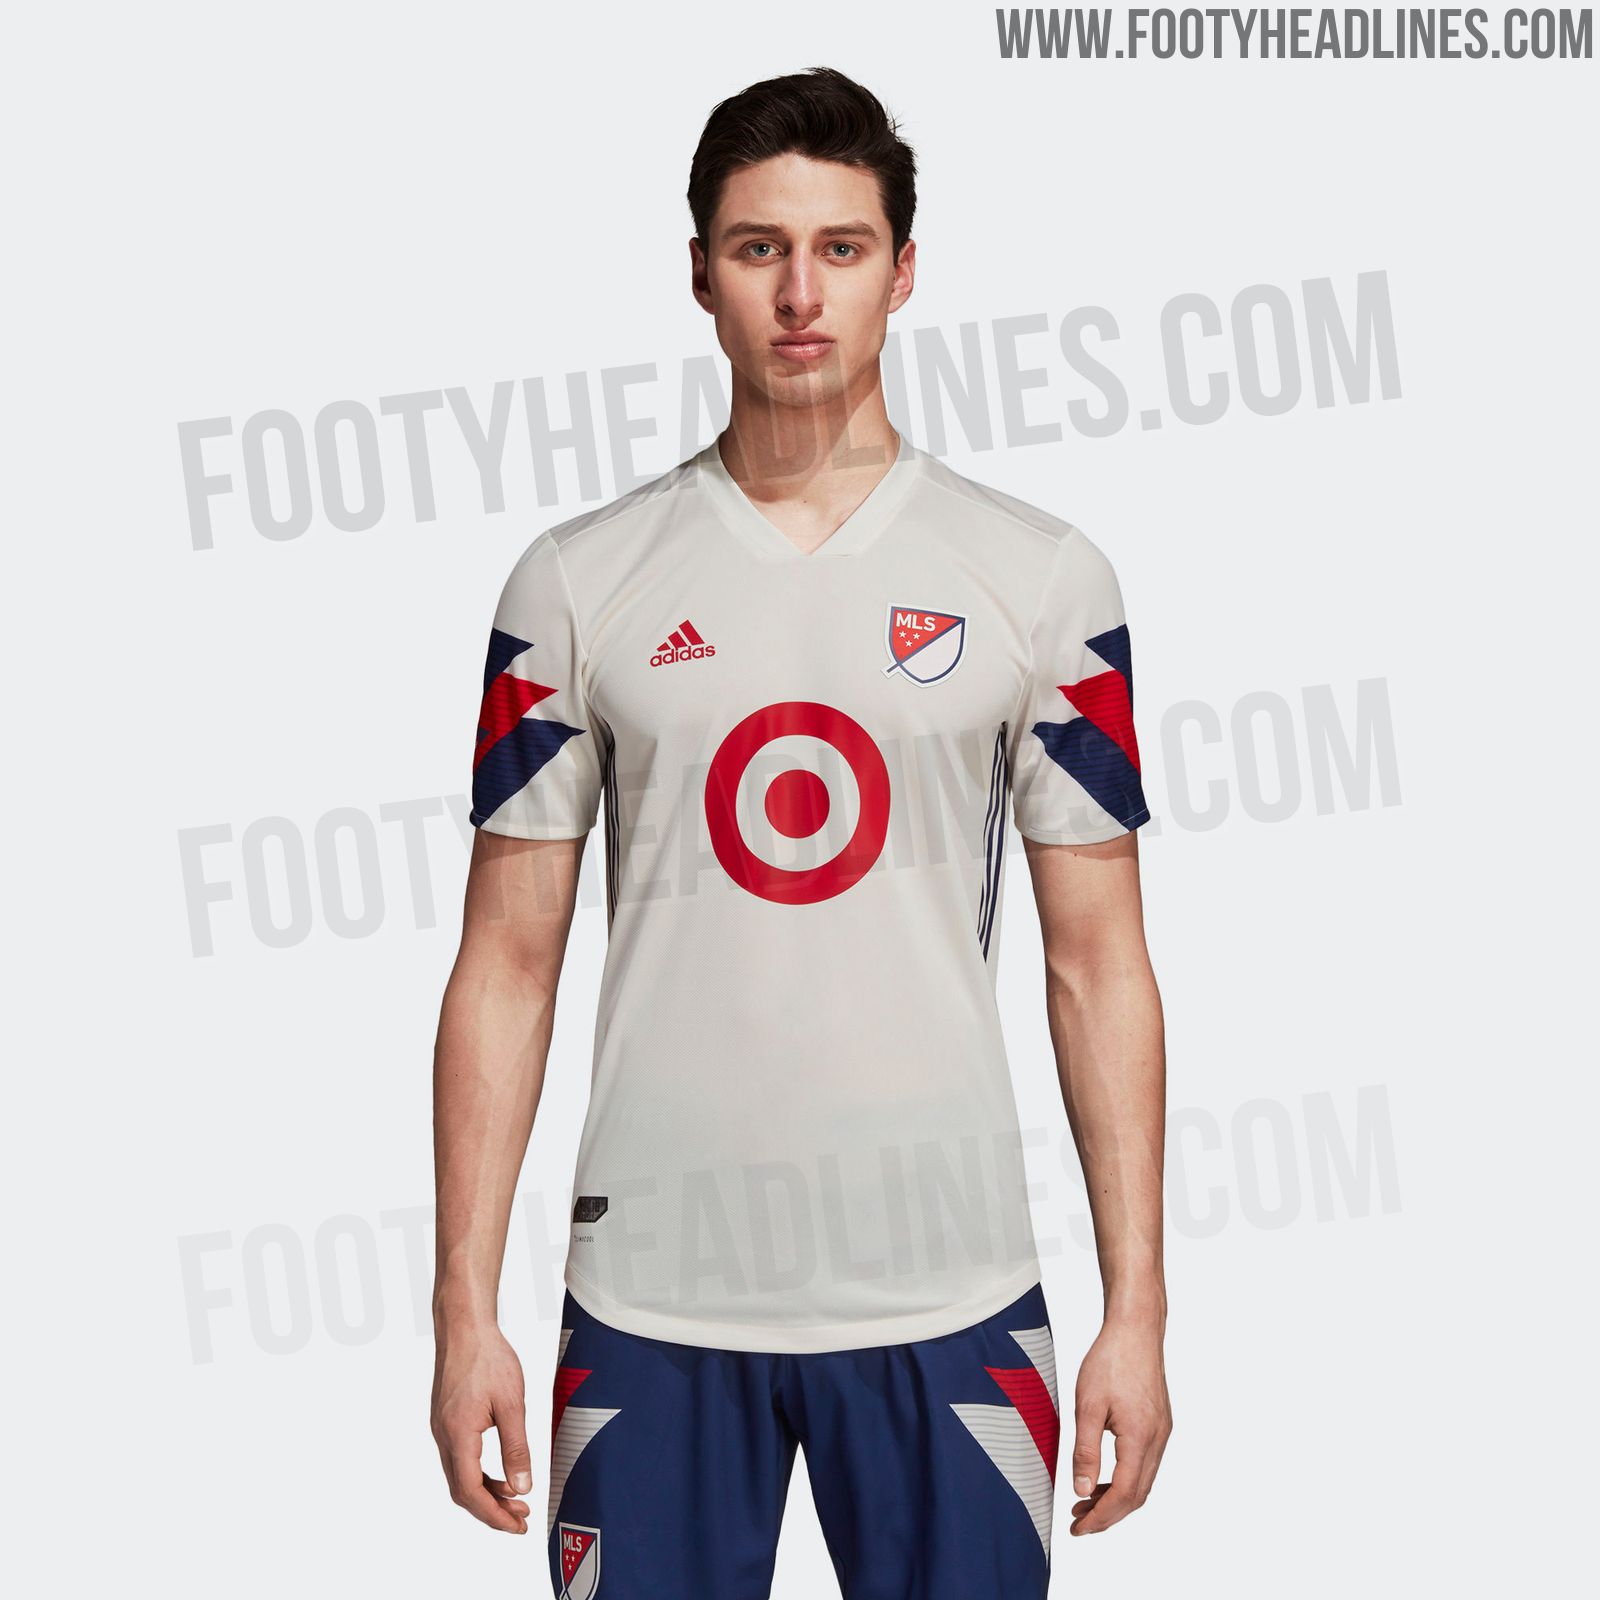 Stunning Adidas MLS 2018 All-Star Kit Released - Footy Headlines